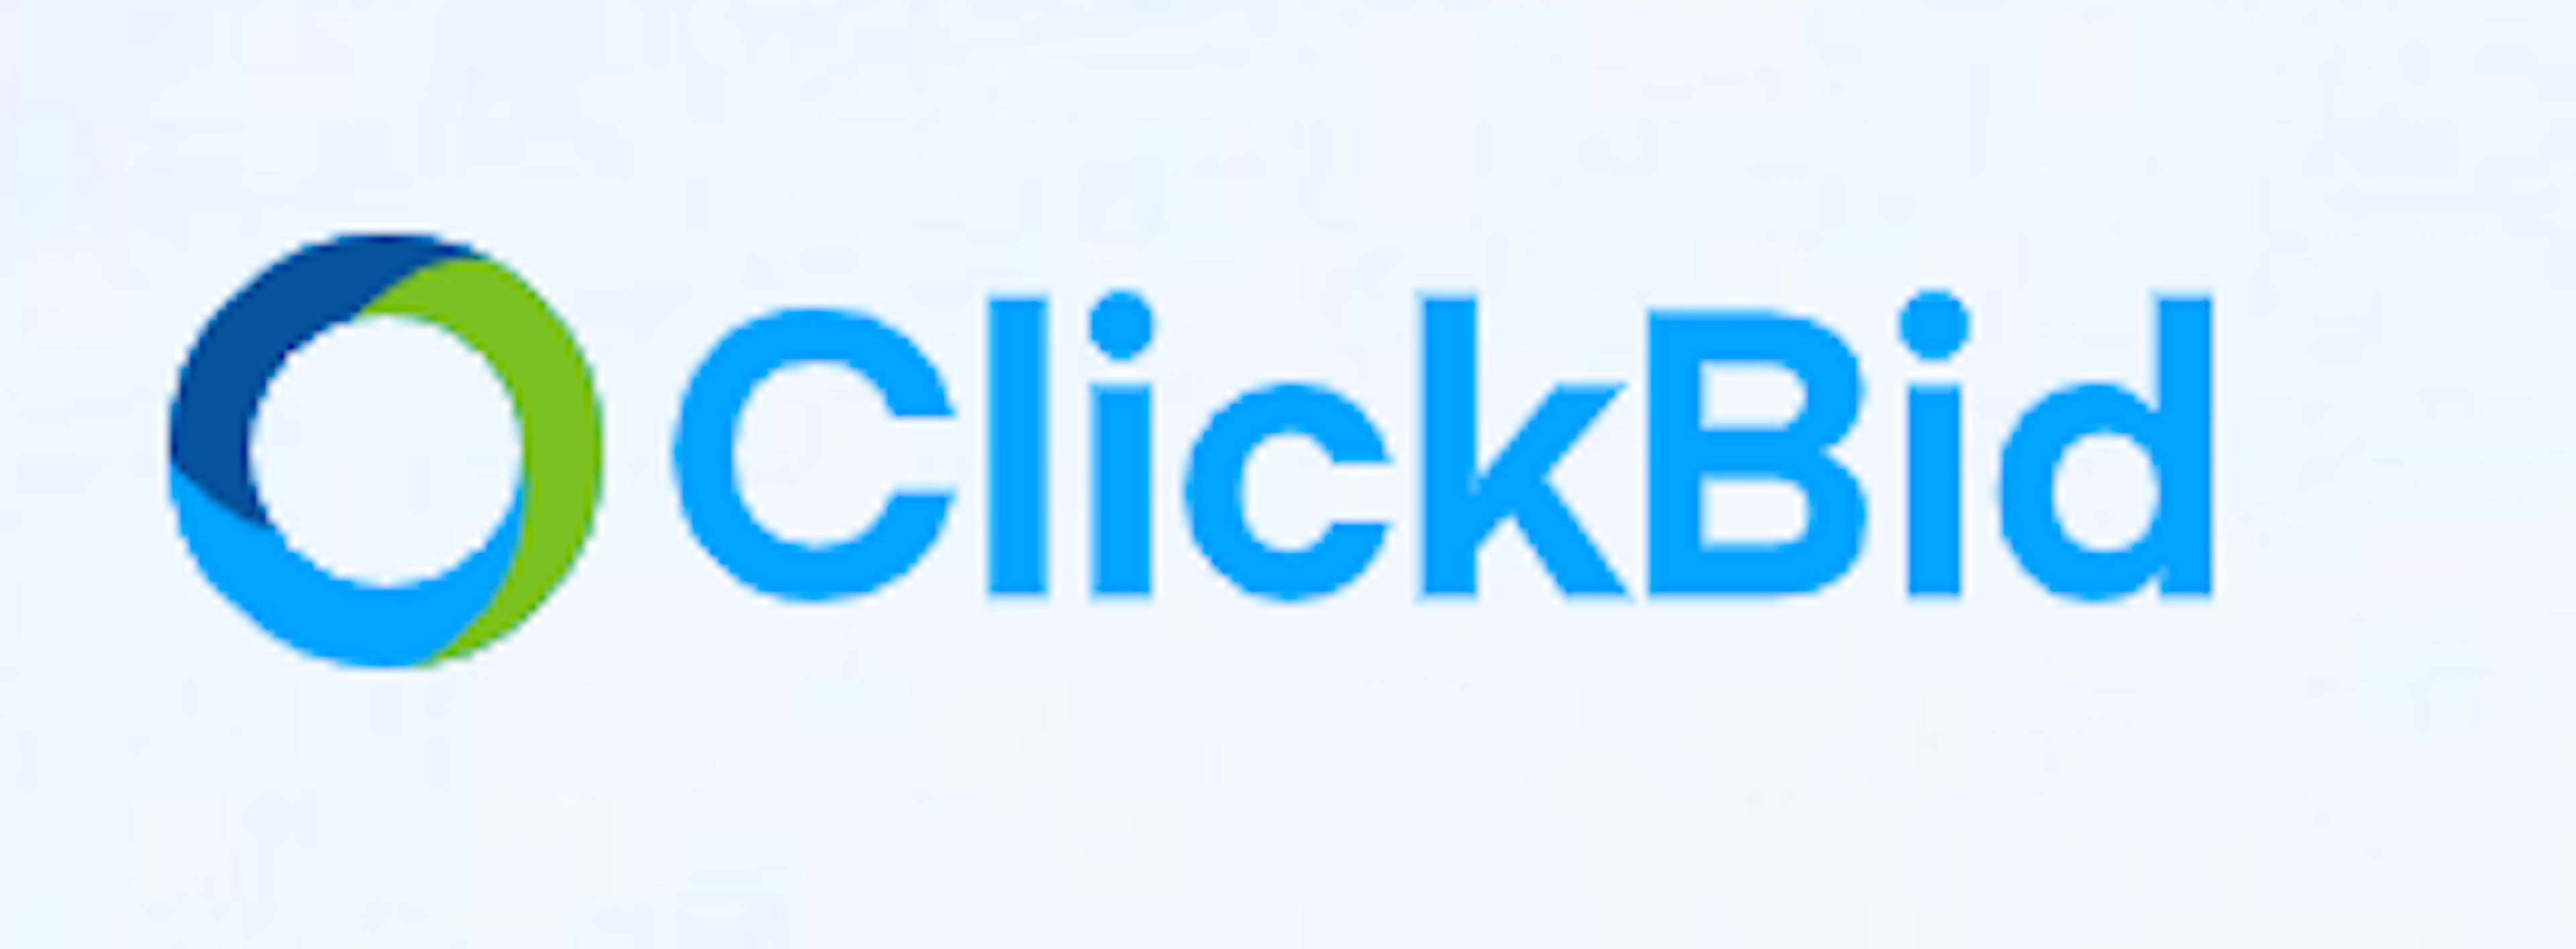 ClickBid Logo